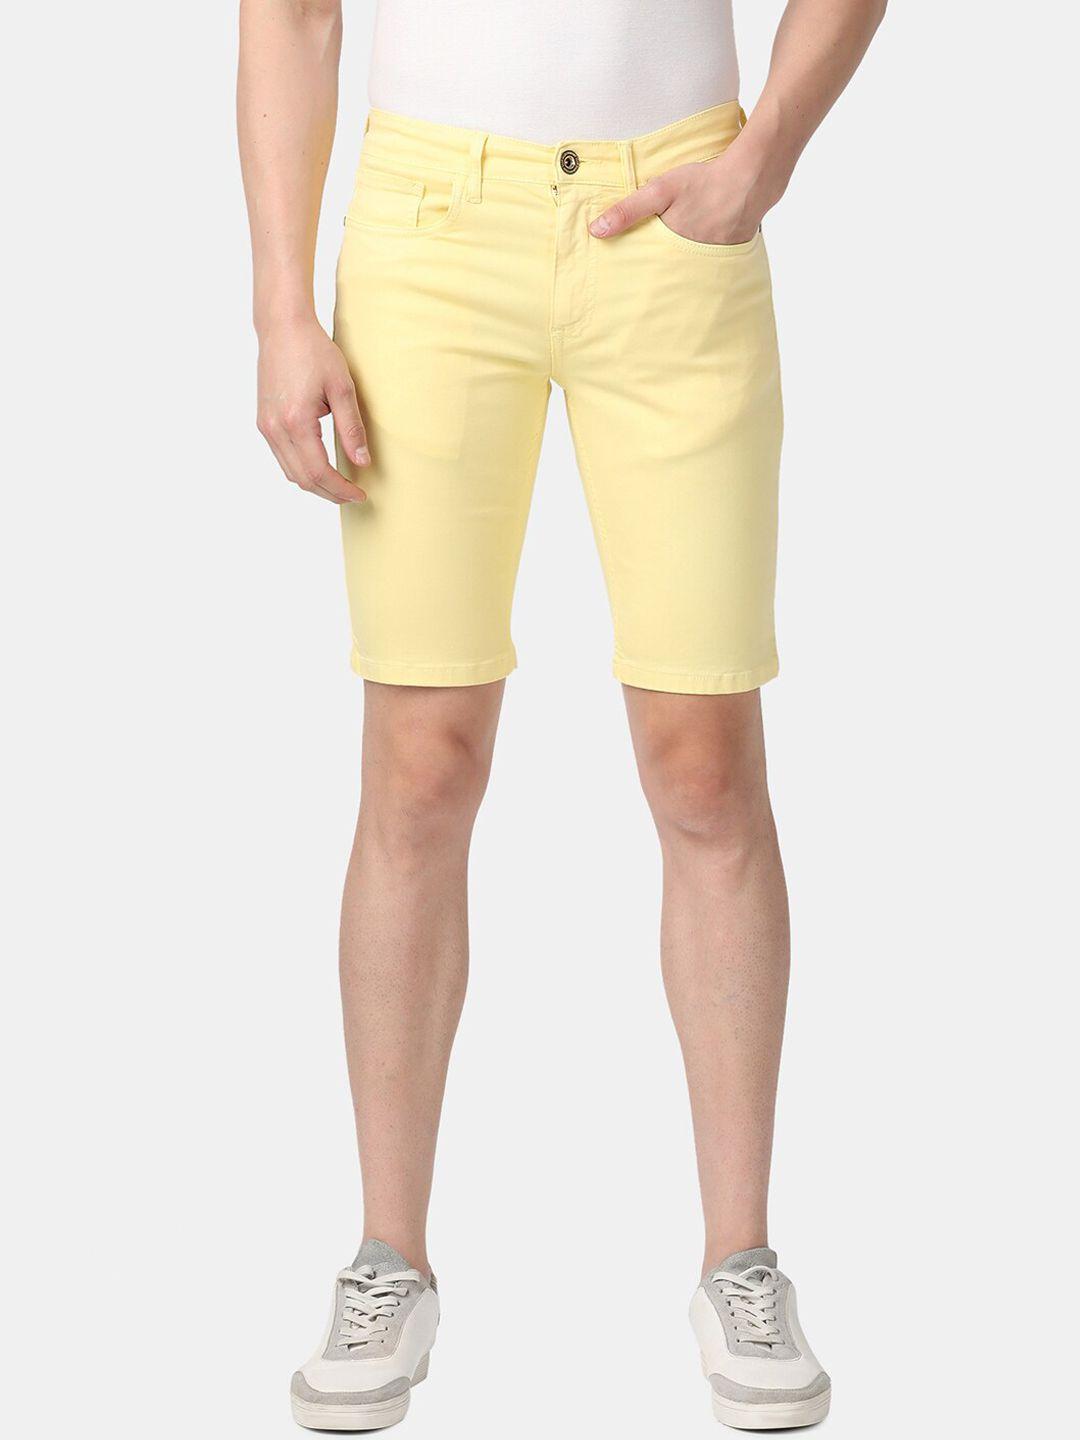 Llak Jeans Men Yellow Solid Slim Fit Denim Shorts